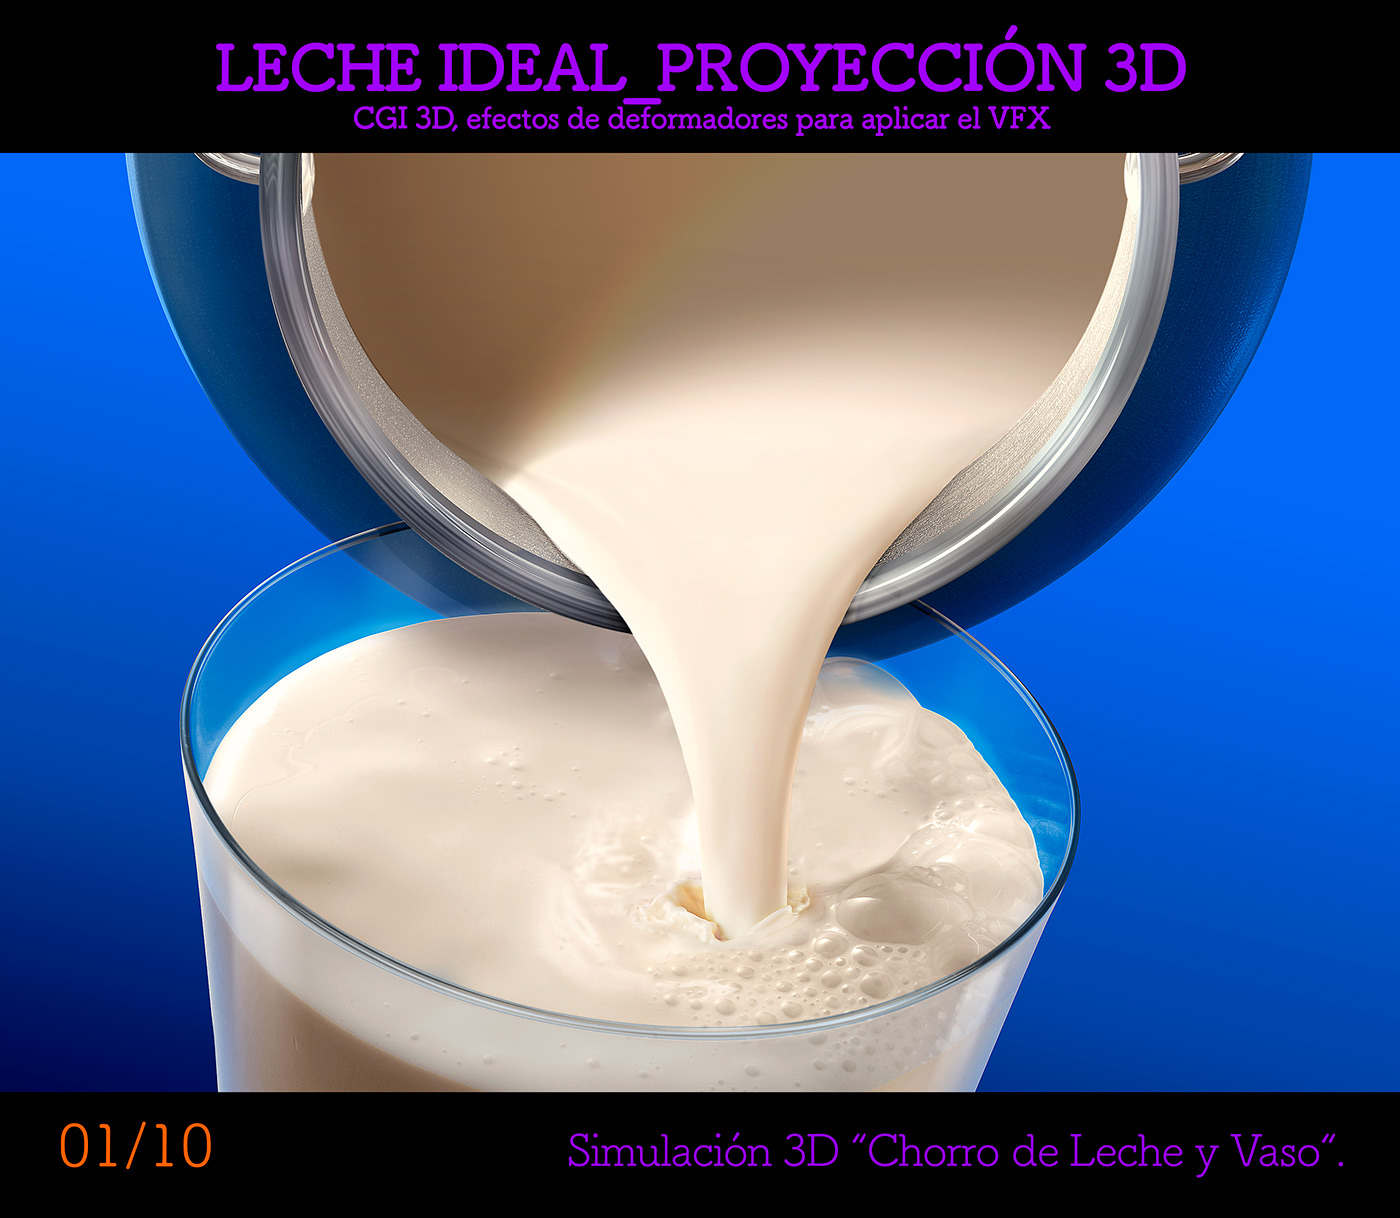 Leche Ideal ilustracion 3D vfx CGI Decheco retoque digital splah liquidos c4d